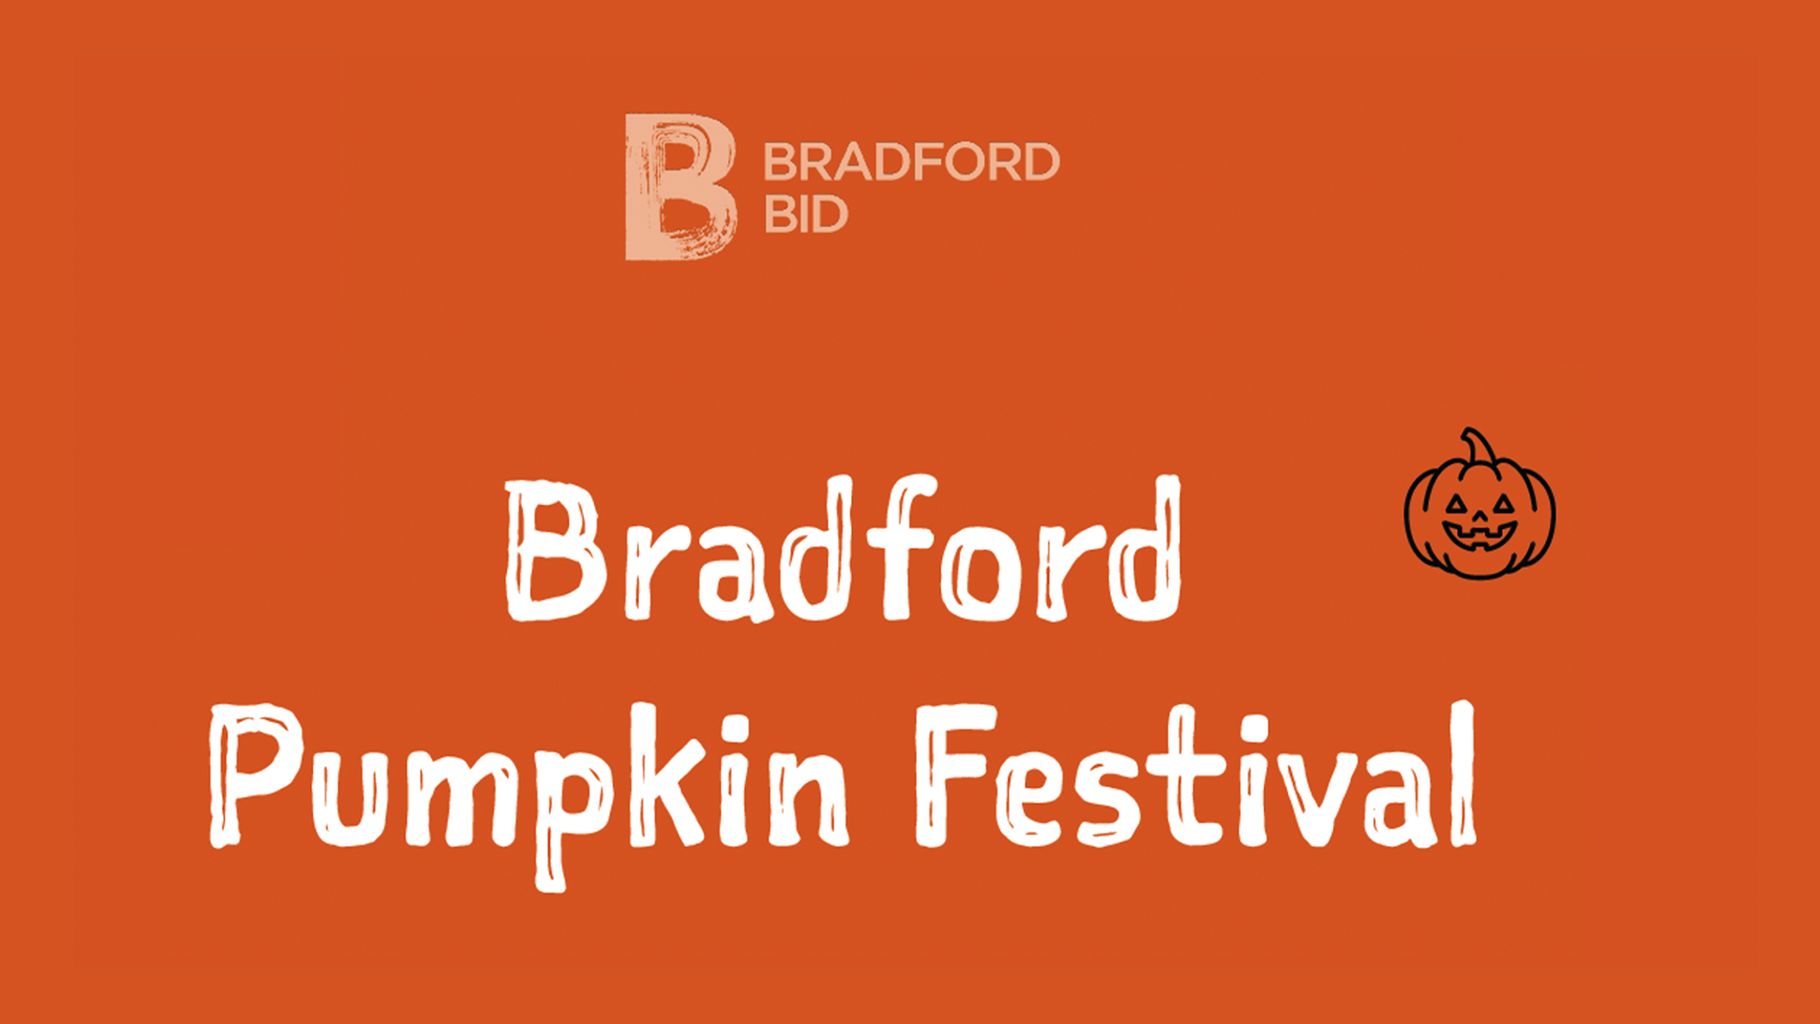 Bradford Bid Pumpkin Festival Events Pulse 1